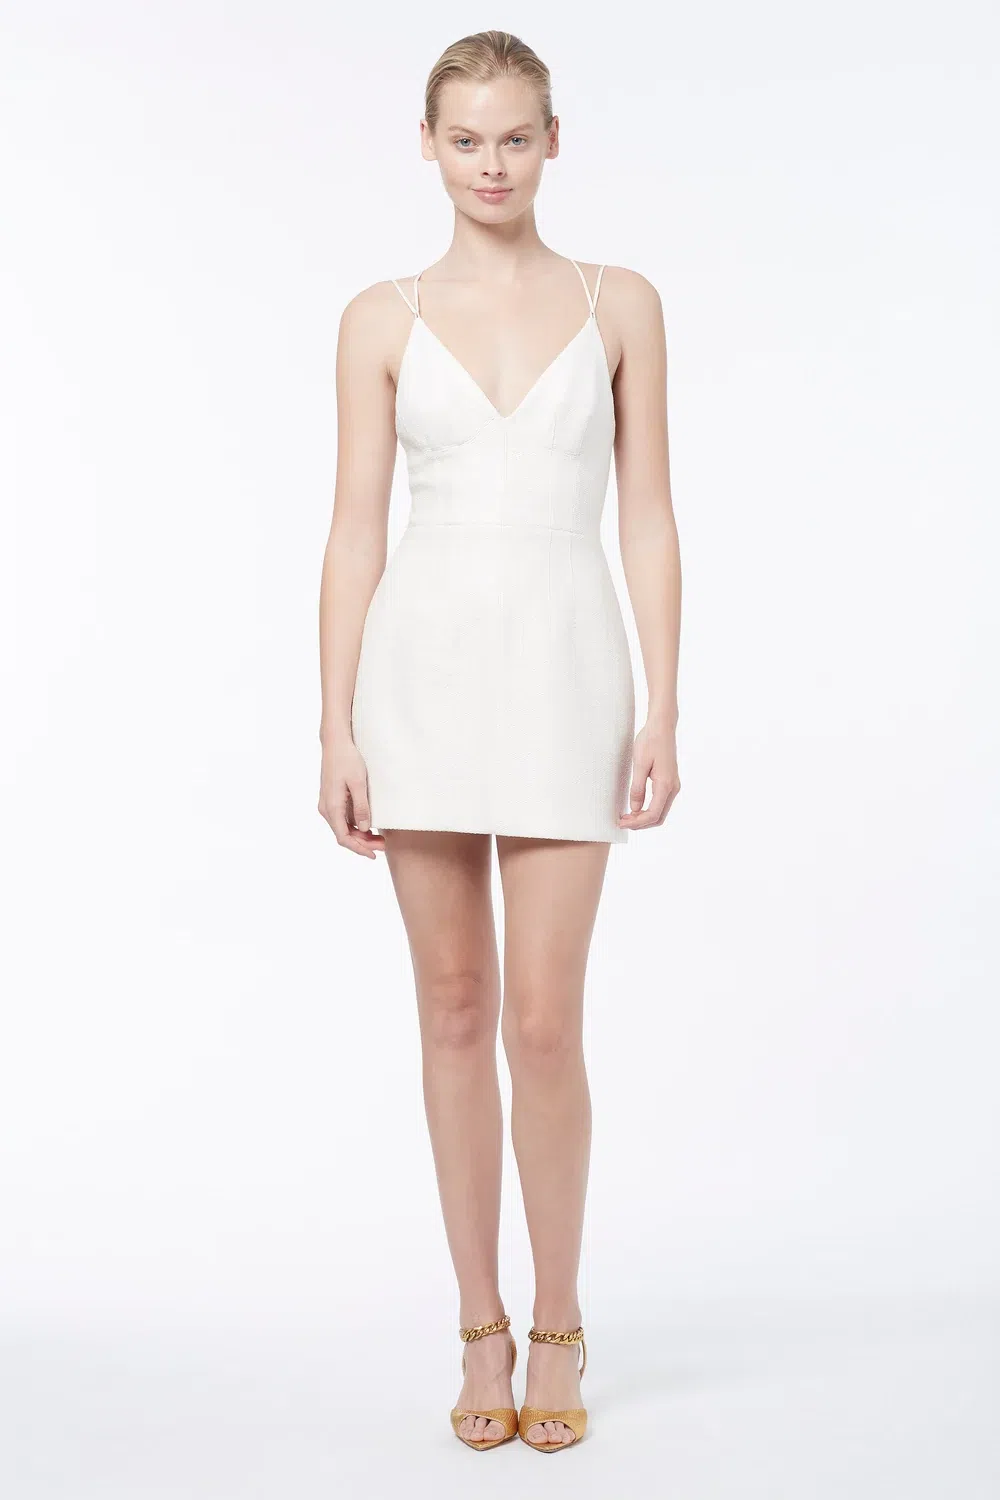 Manning Cartell Lace Pattern Long Dress - White Dresses, Clothing -  WMC21056